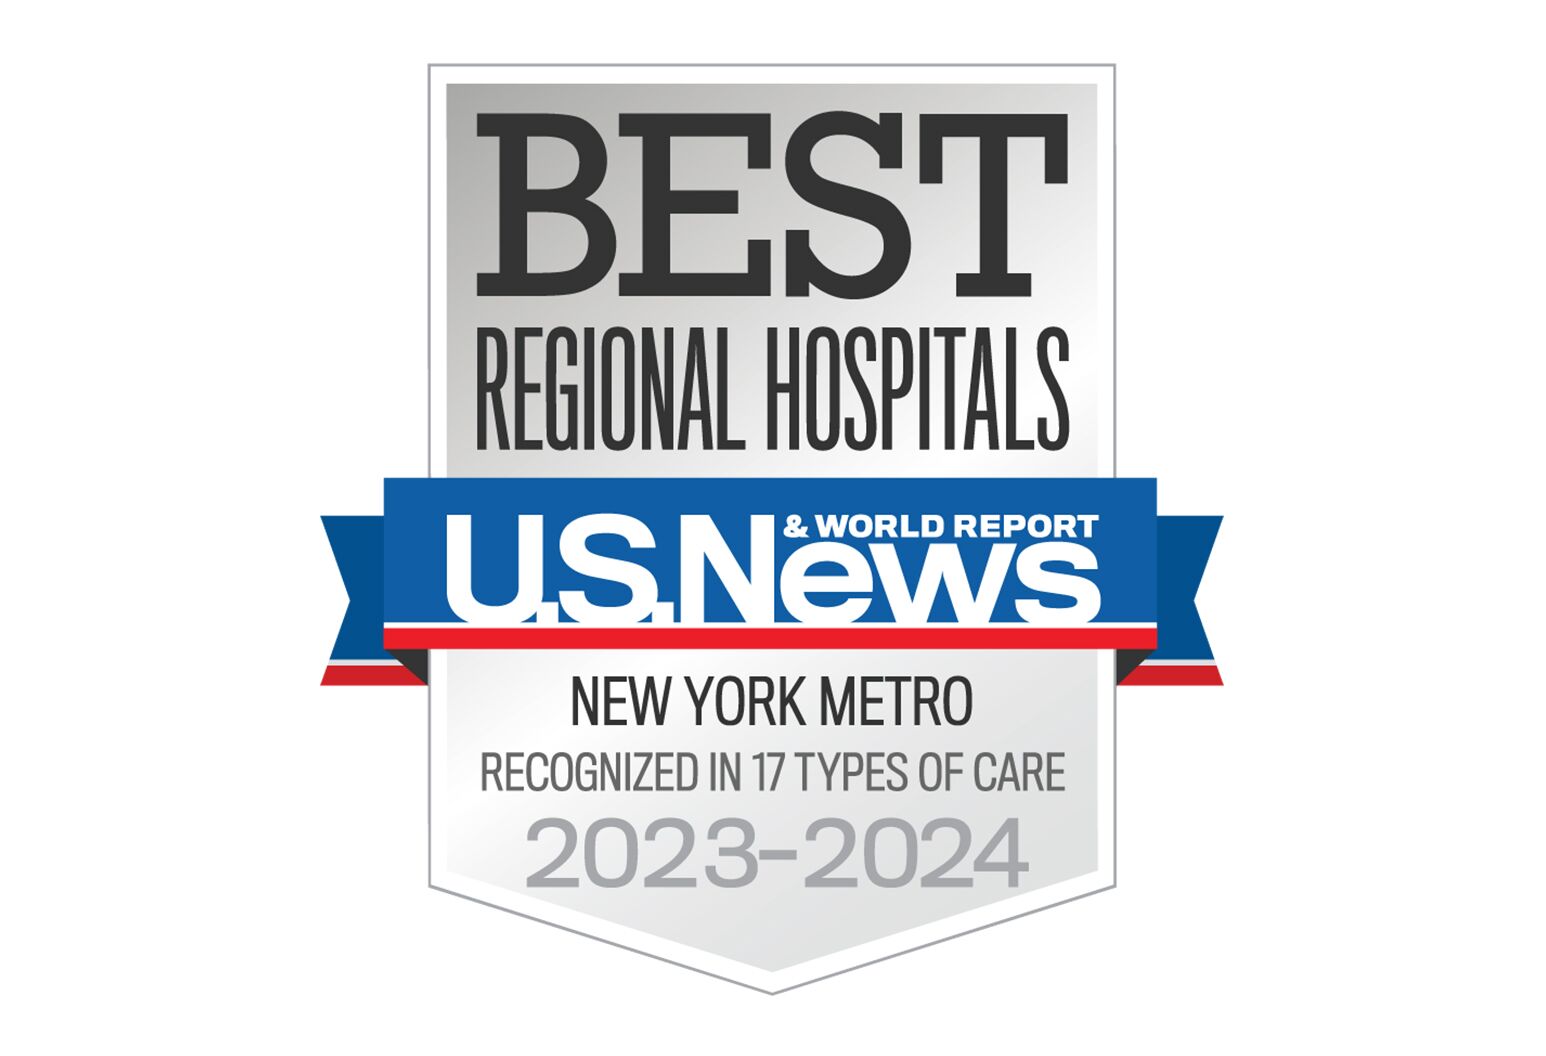 U.S news and world report, best regional hospital badge, 2023-2024